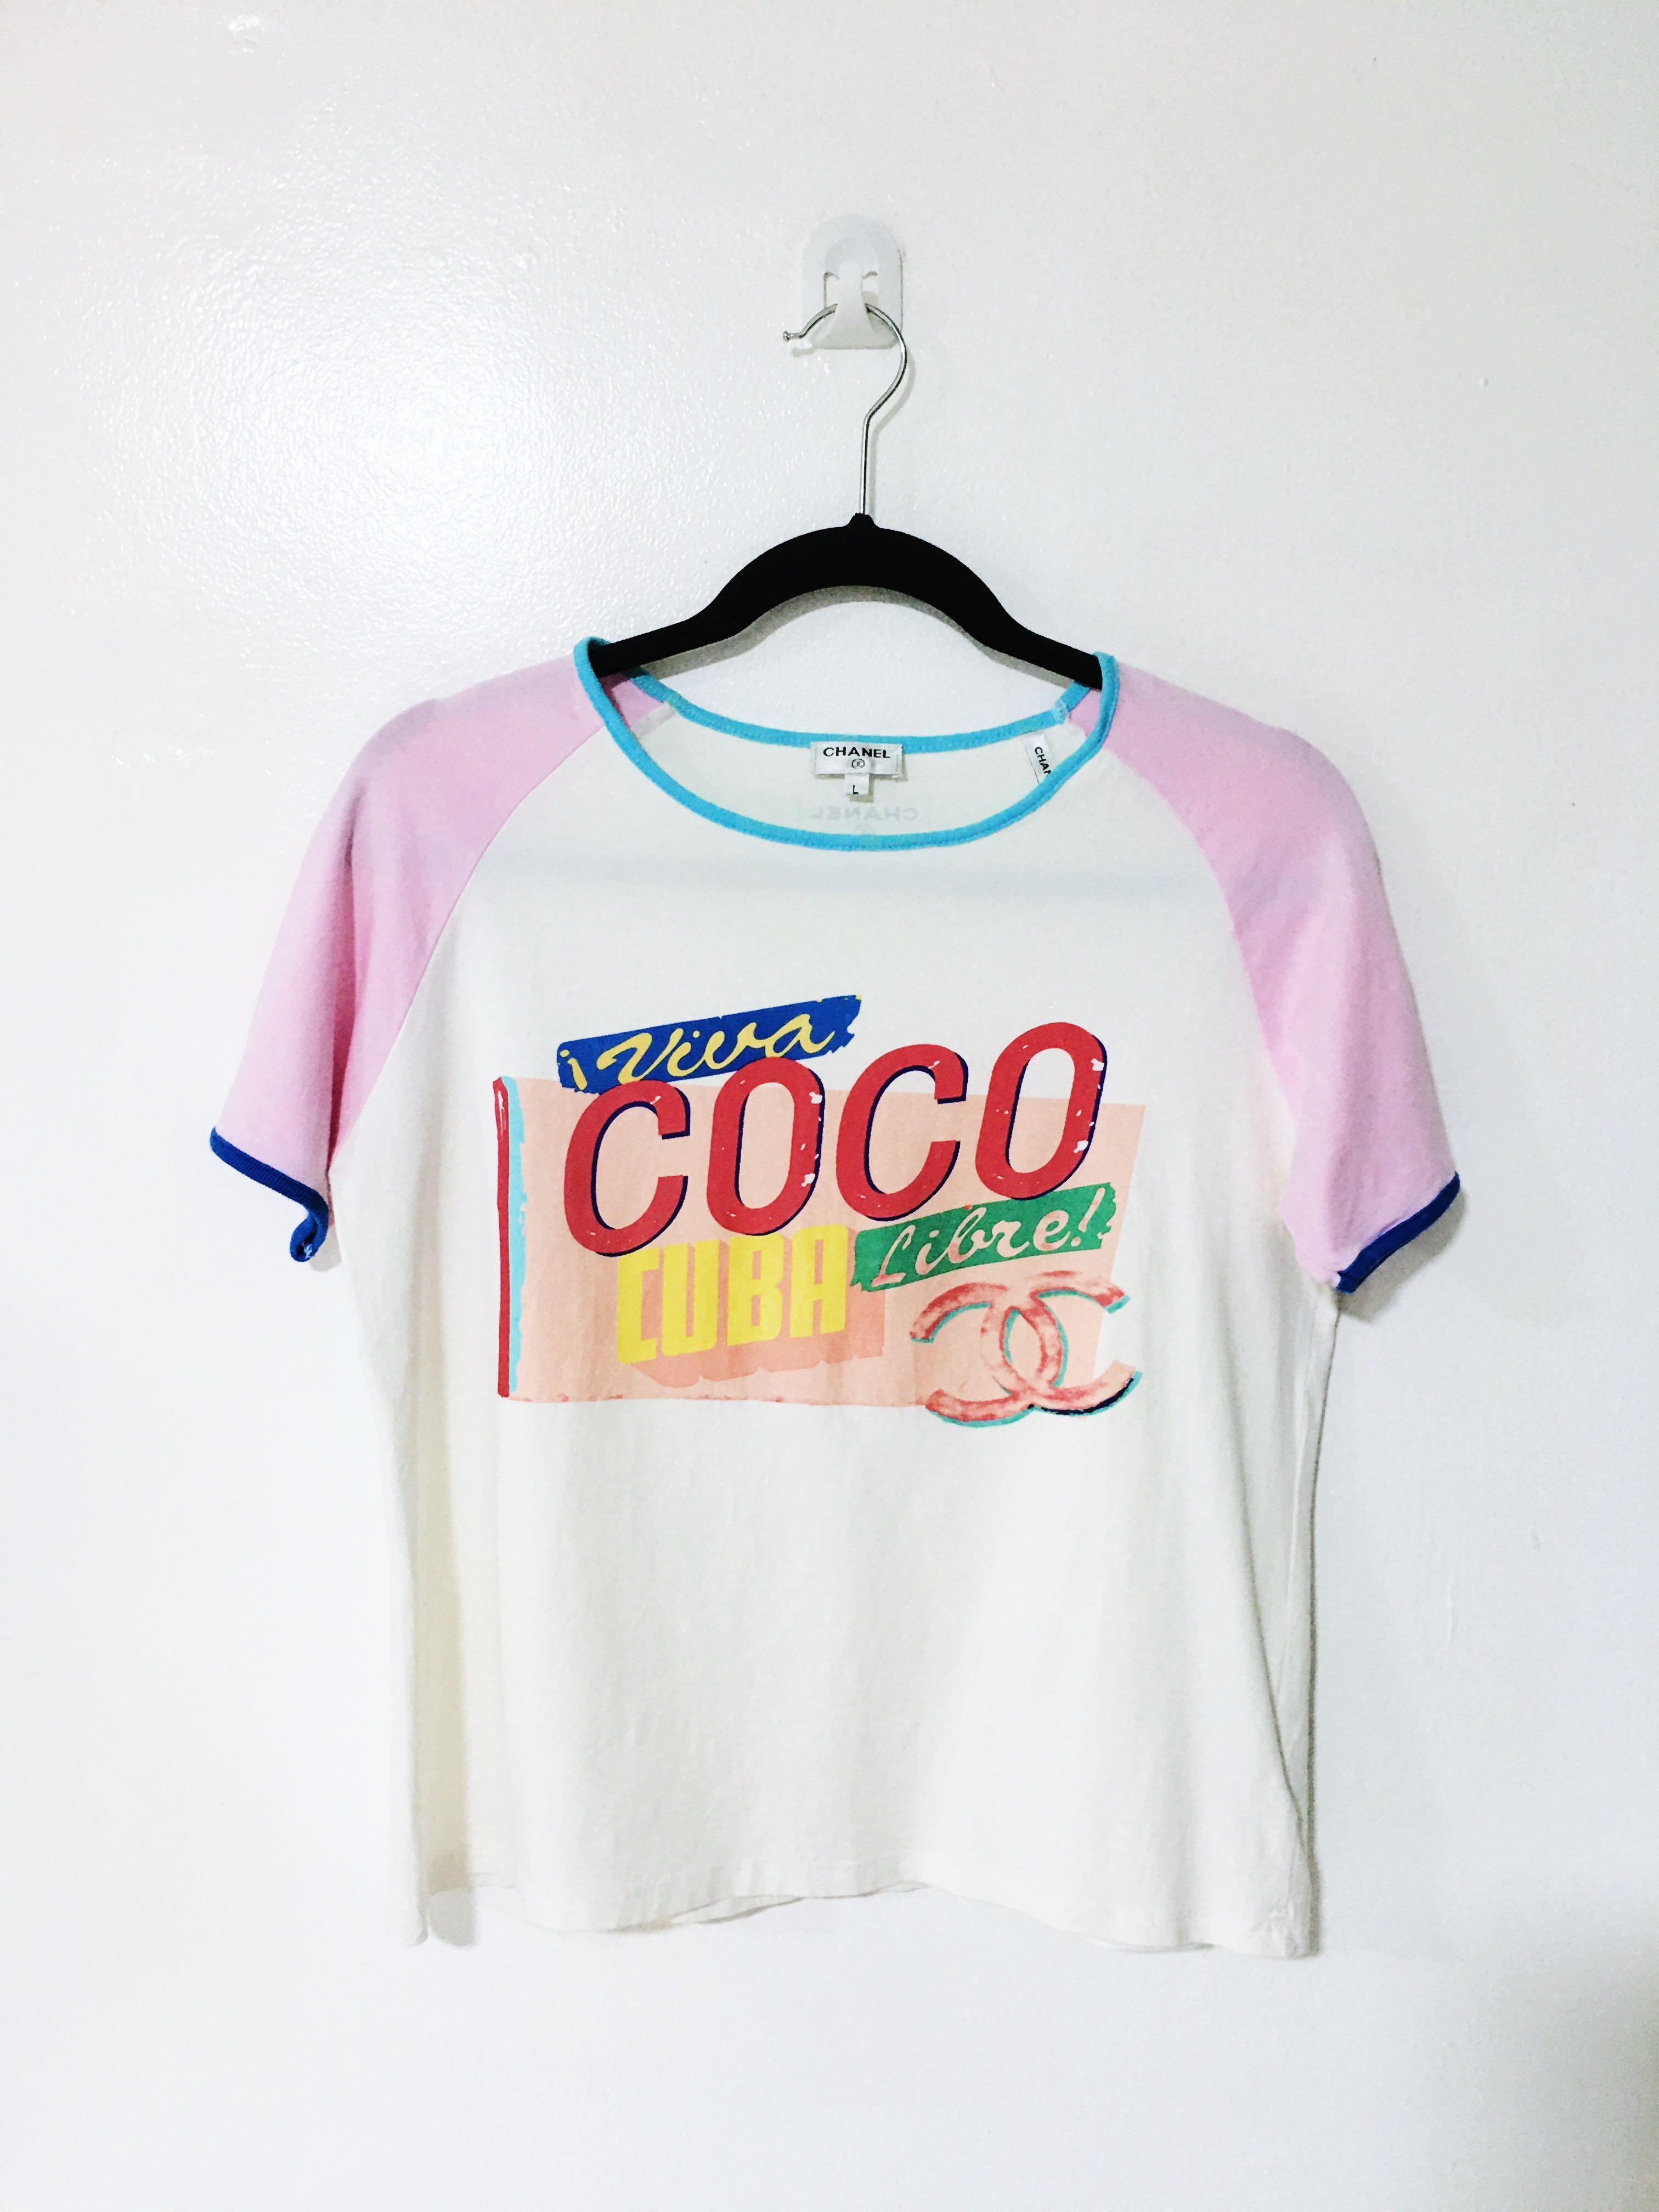 ⚜️Chanel Coco Cuba Libre Runway Shirt, Luxury, Apparel on